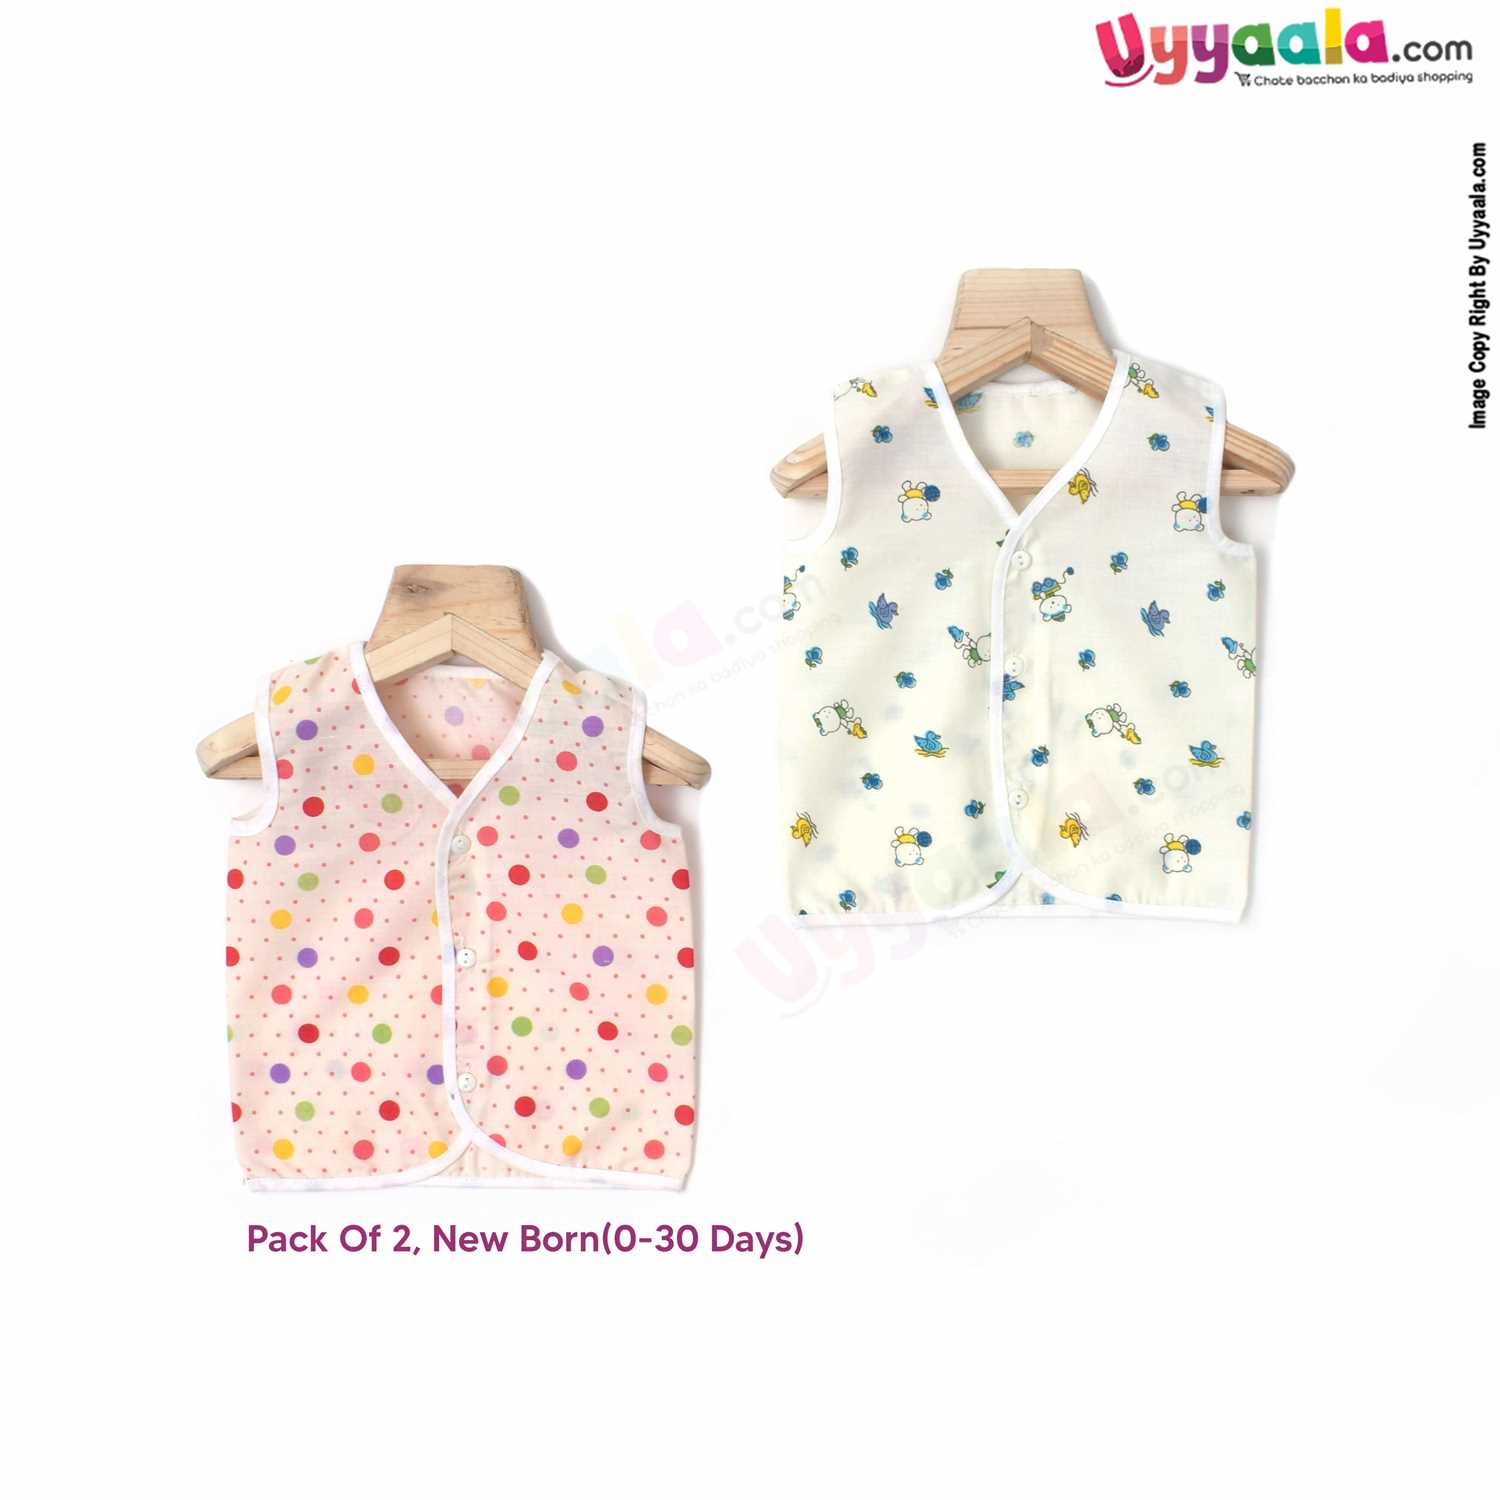 SNUG UP Sleeveless Baby Jabla Set, Front Opening Button Model, Premium Quality Cotton Baby Wear, (0-30 Days), Dots & Bear Print, 2Pack - Cream & Peach